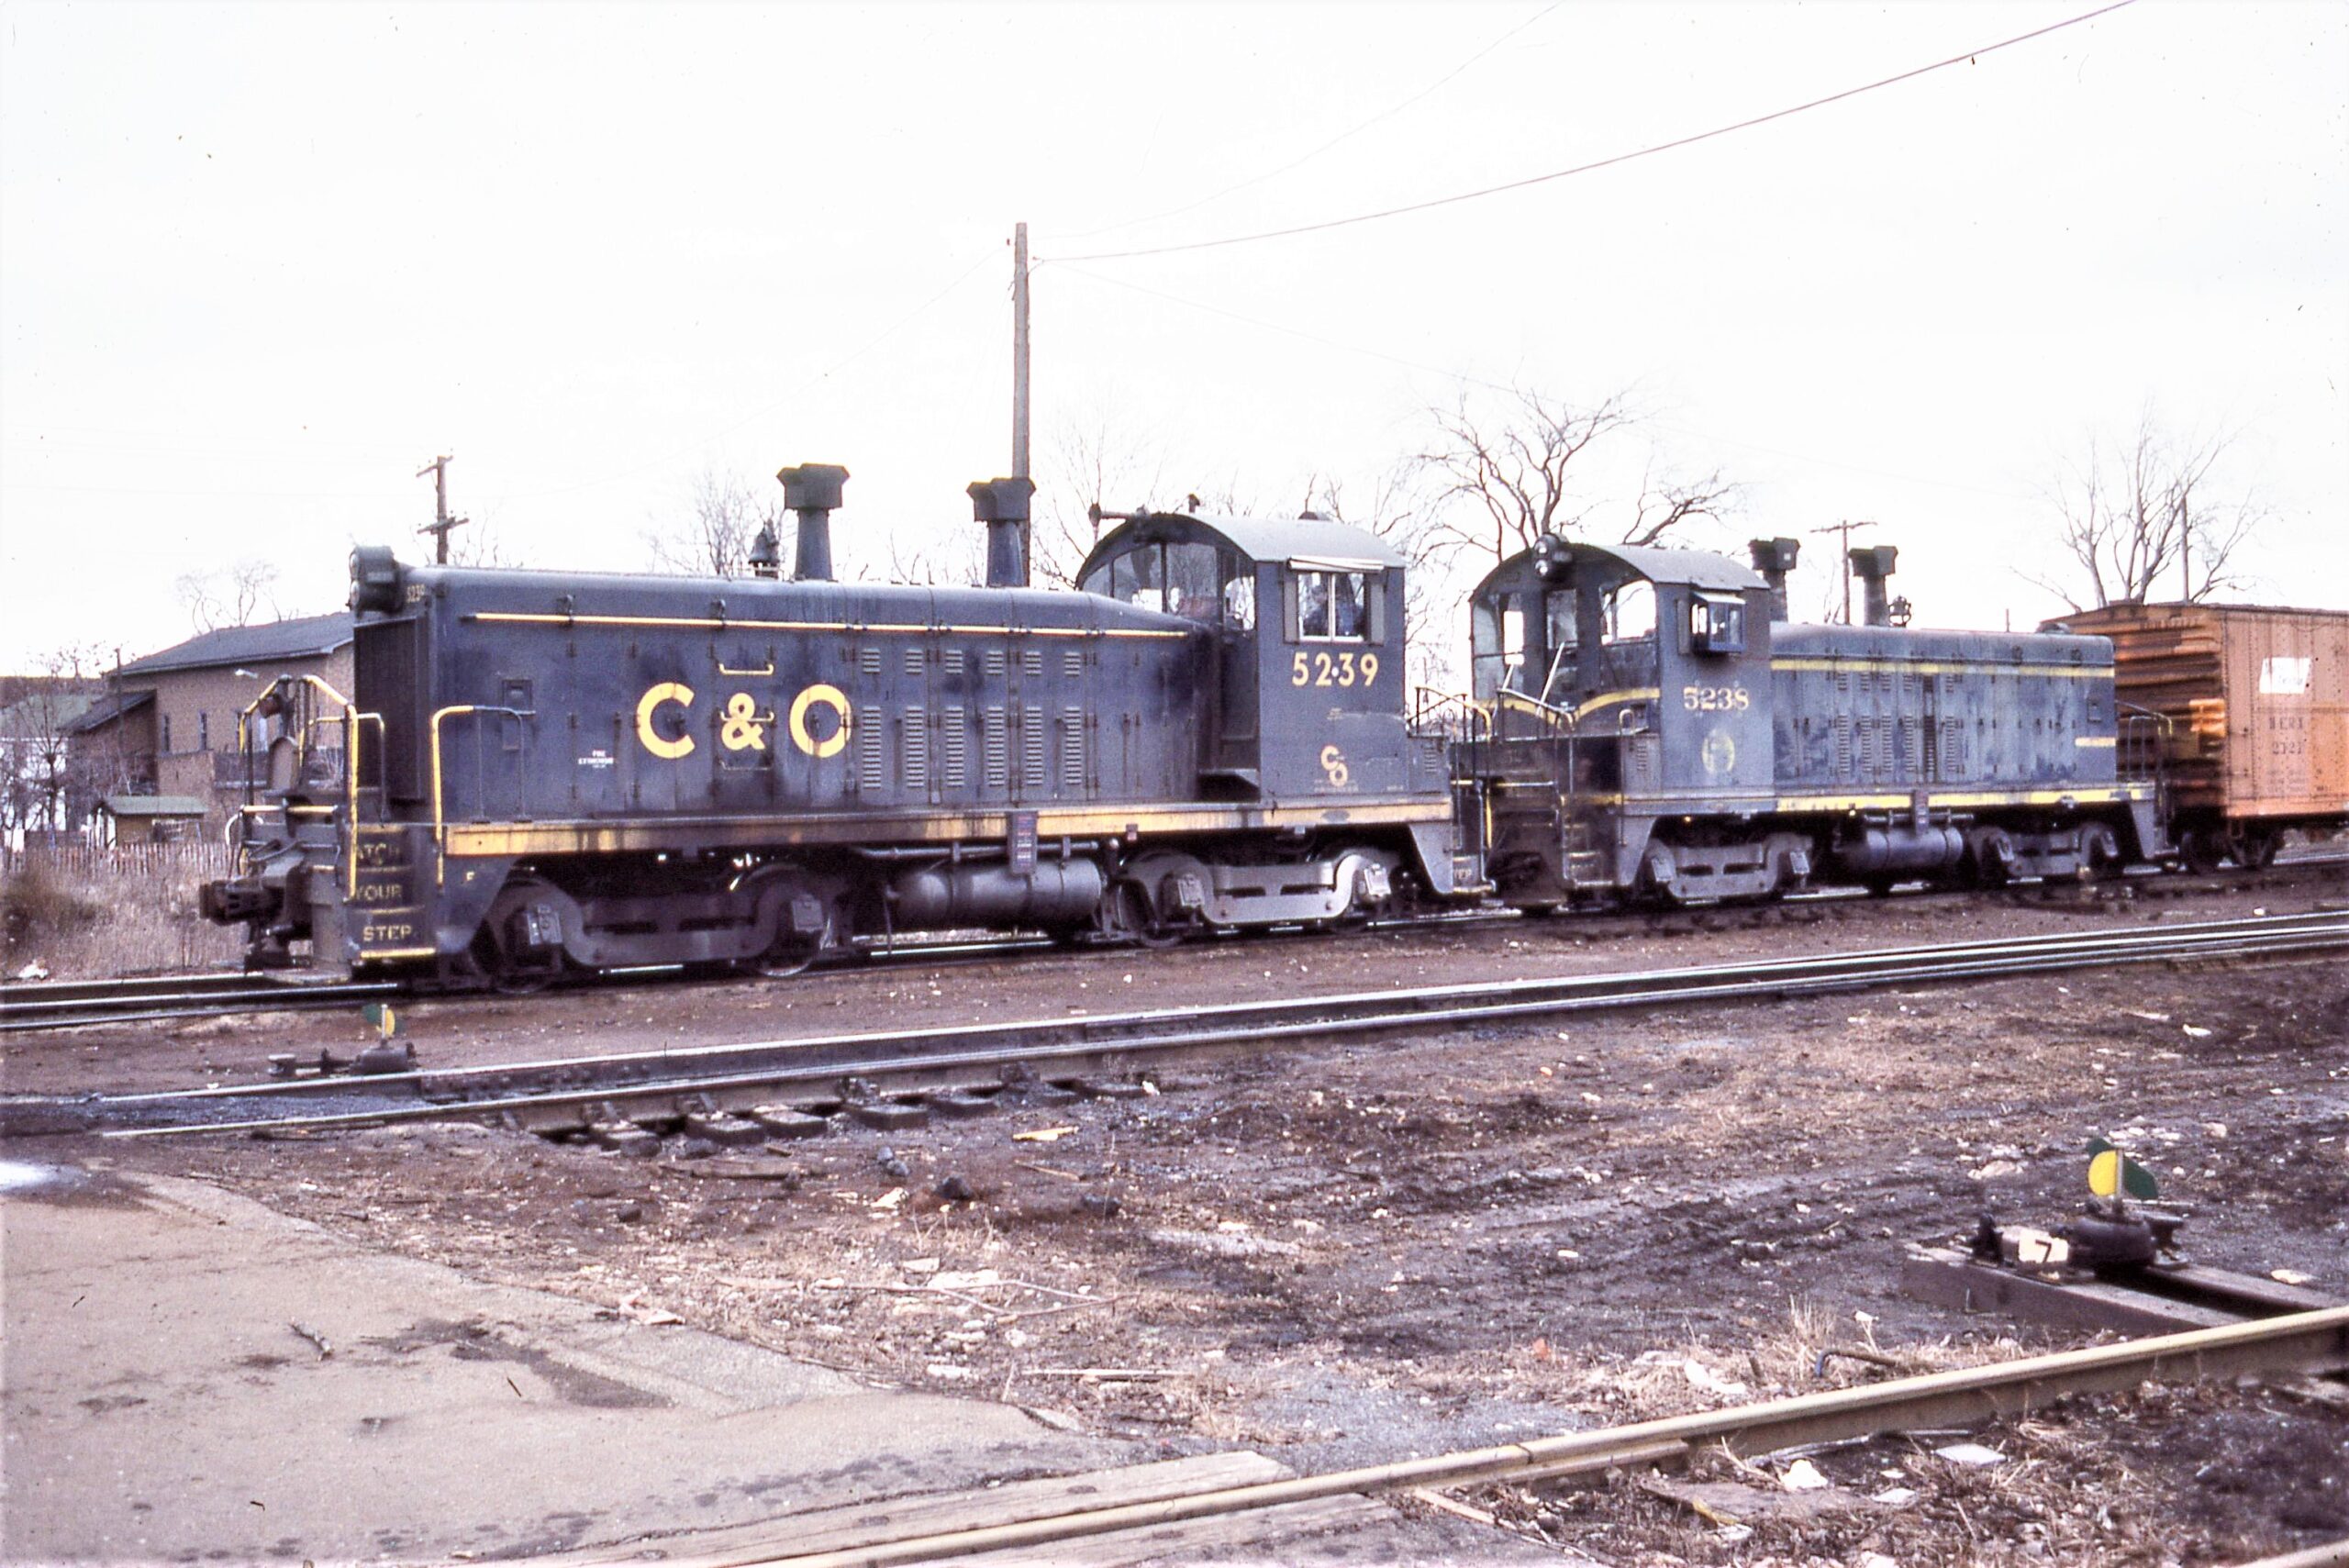 Chesapeake and Ohio | Saginaw, Michigan | SW8 5239 & 5238 | March 1977 | Elmer Kremkow photo